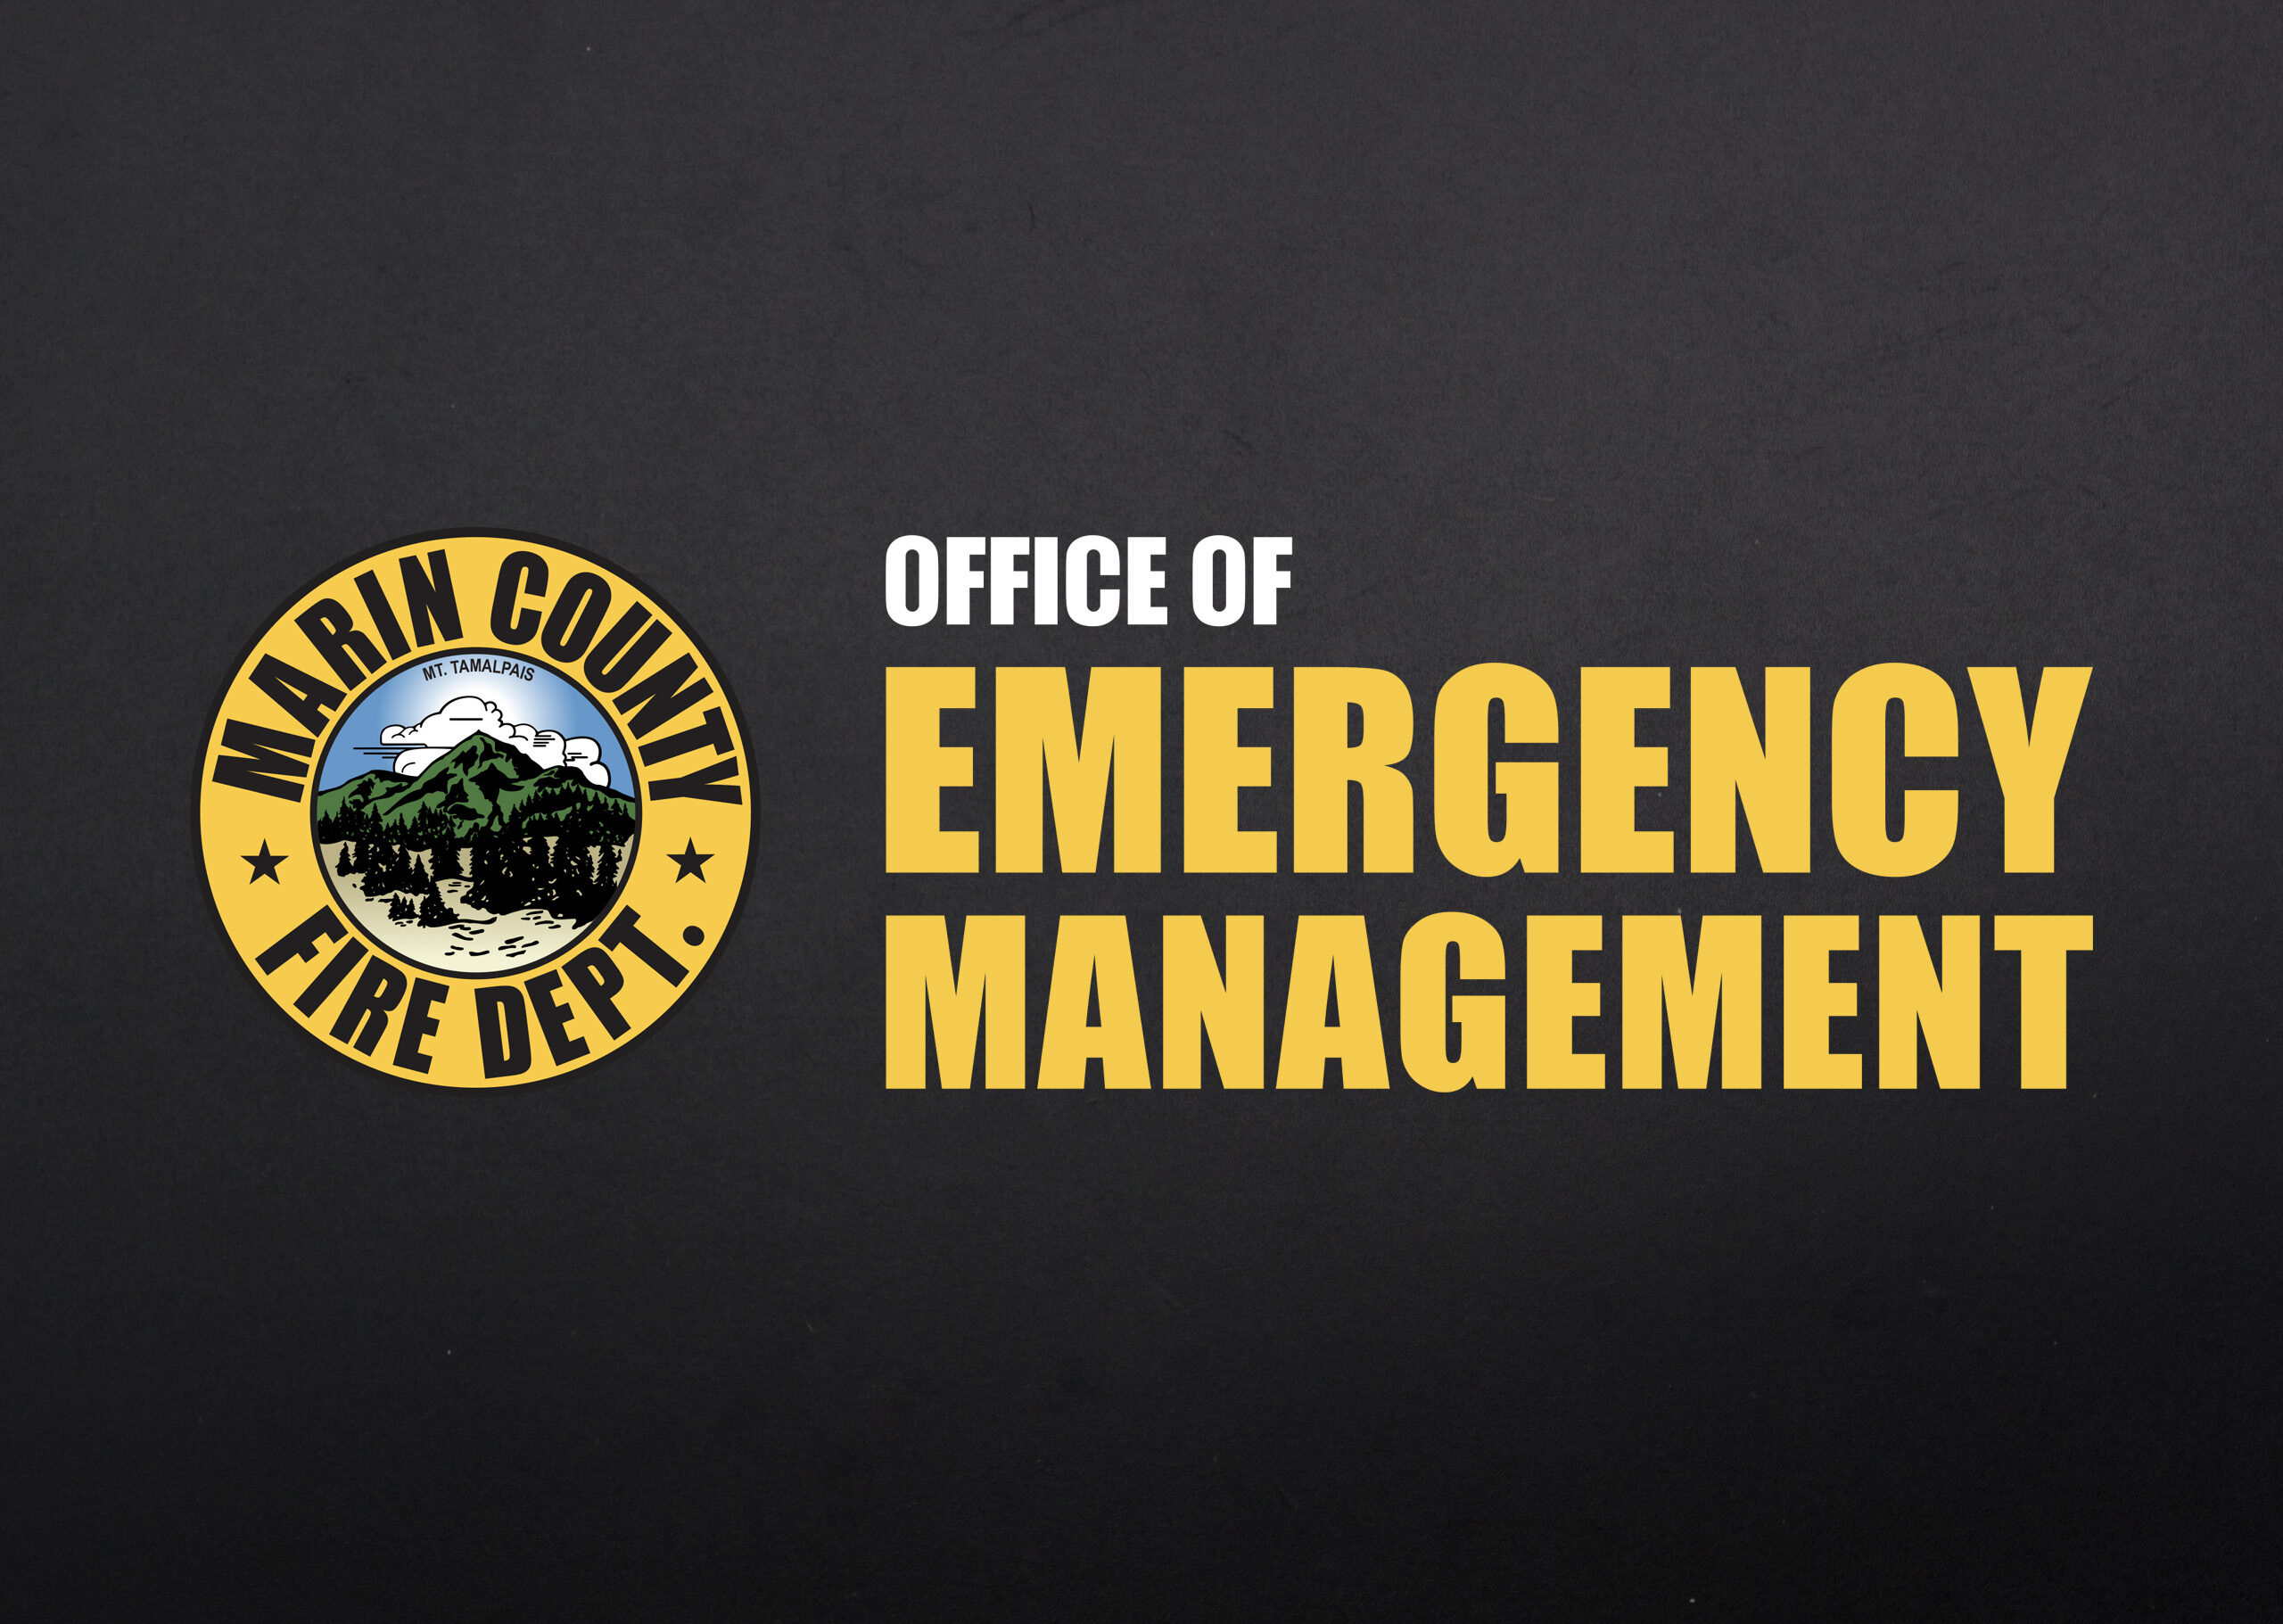 Office of Emergency Management logo